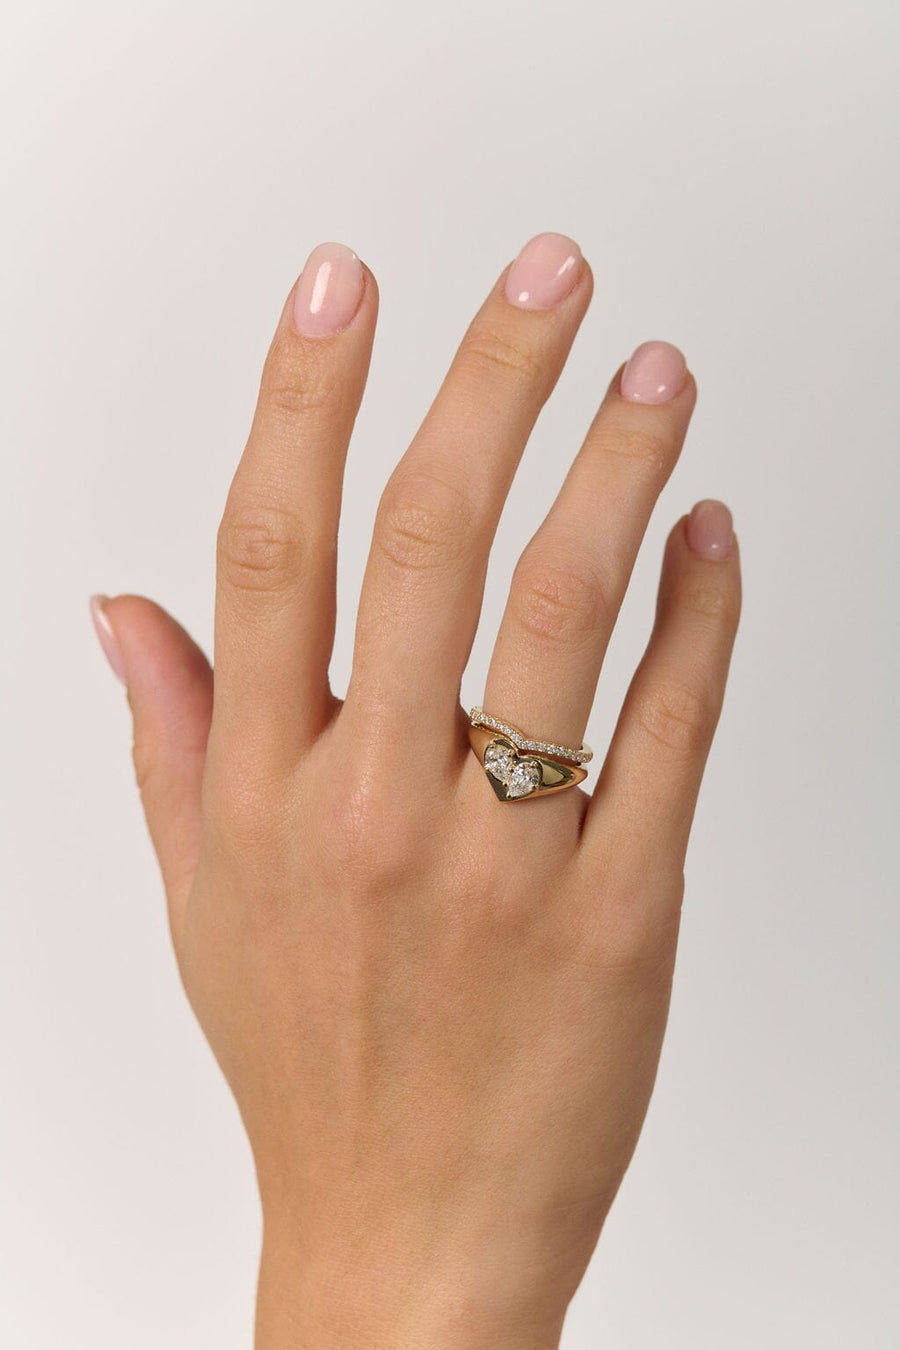 The Other Half Birthstone Signet Ring - Eliise Maar Jewellery